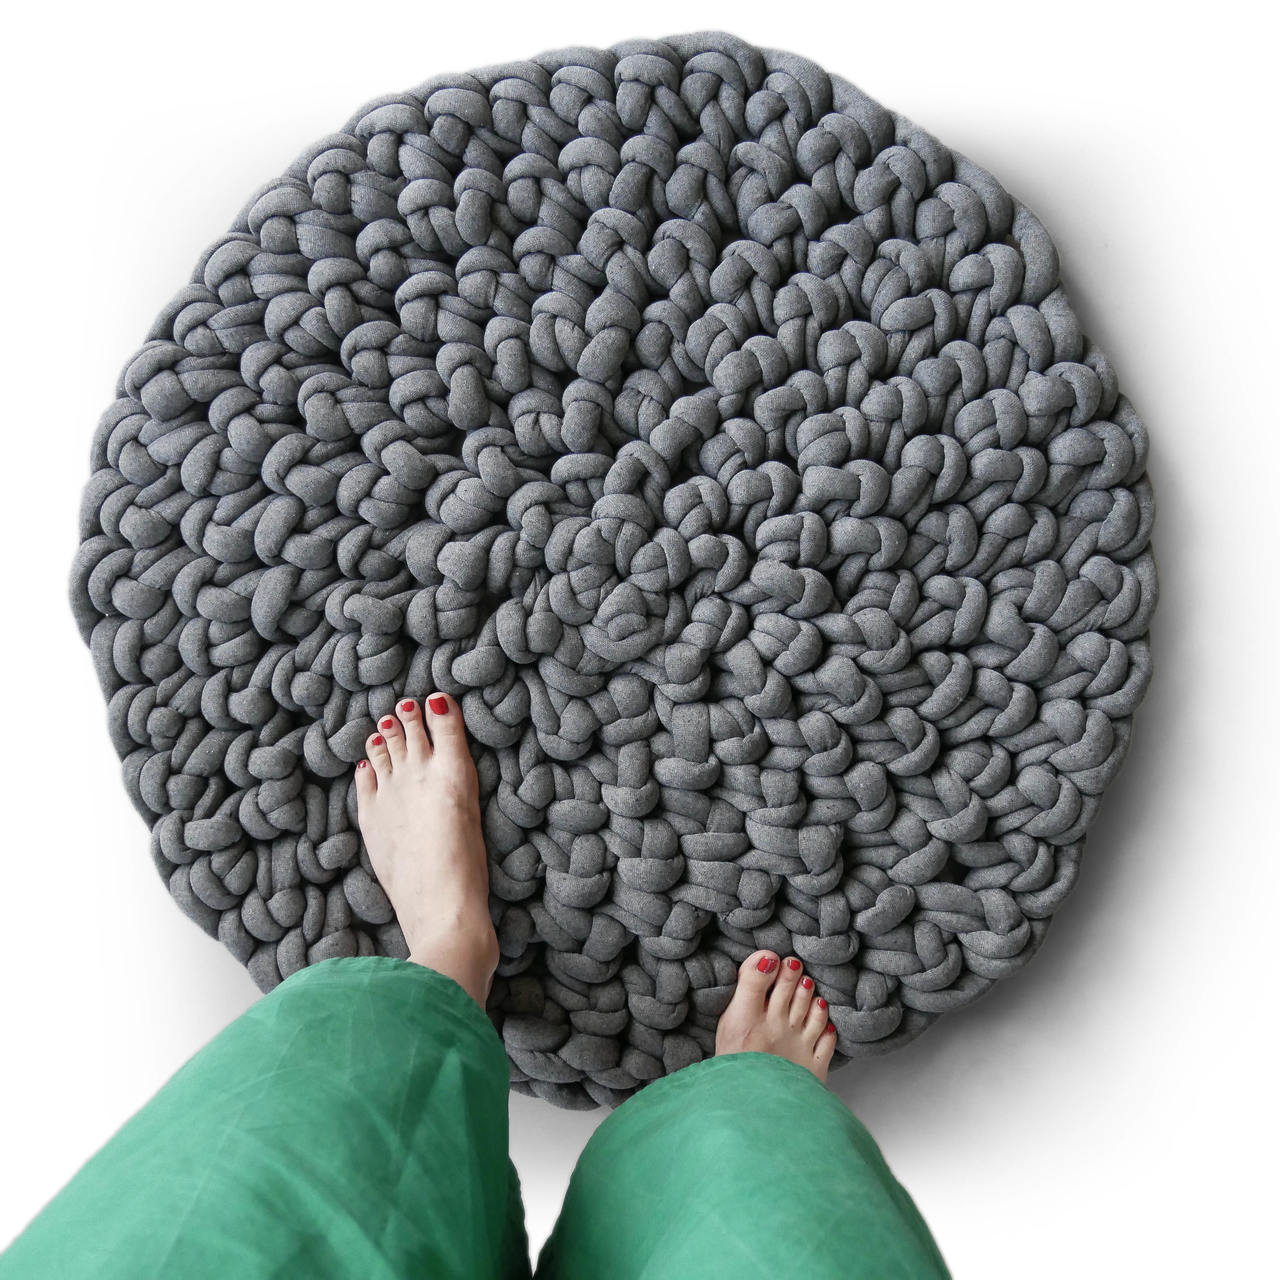 chunky-knit-cotton-tube-yarn-organic-bathr-rug-interior-trends-2021-6_1200471_Easy-Resize.com